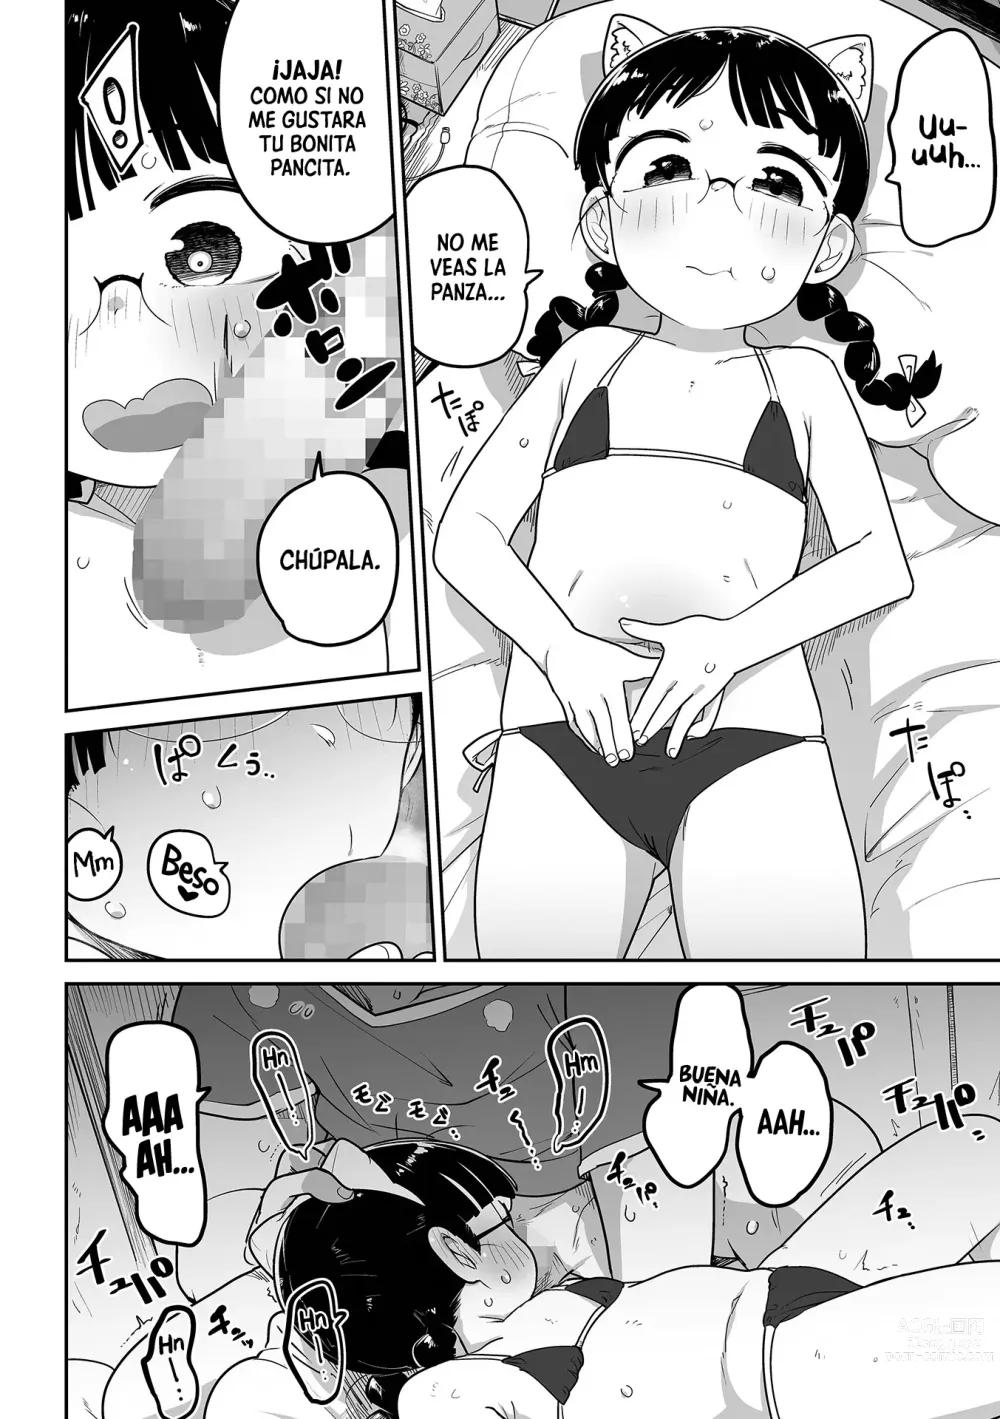 Page 6 of manga Servicio de Pagos Inko